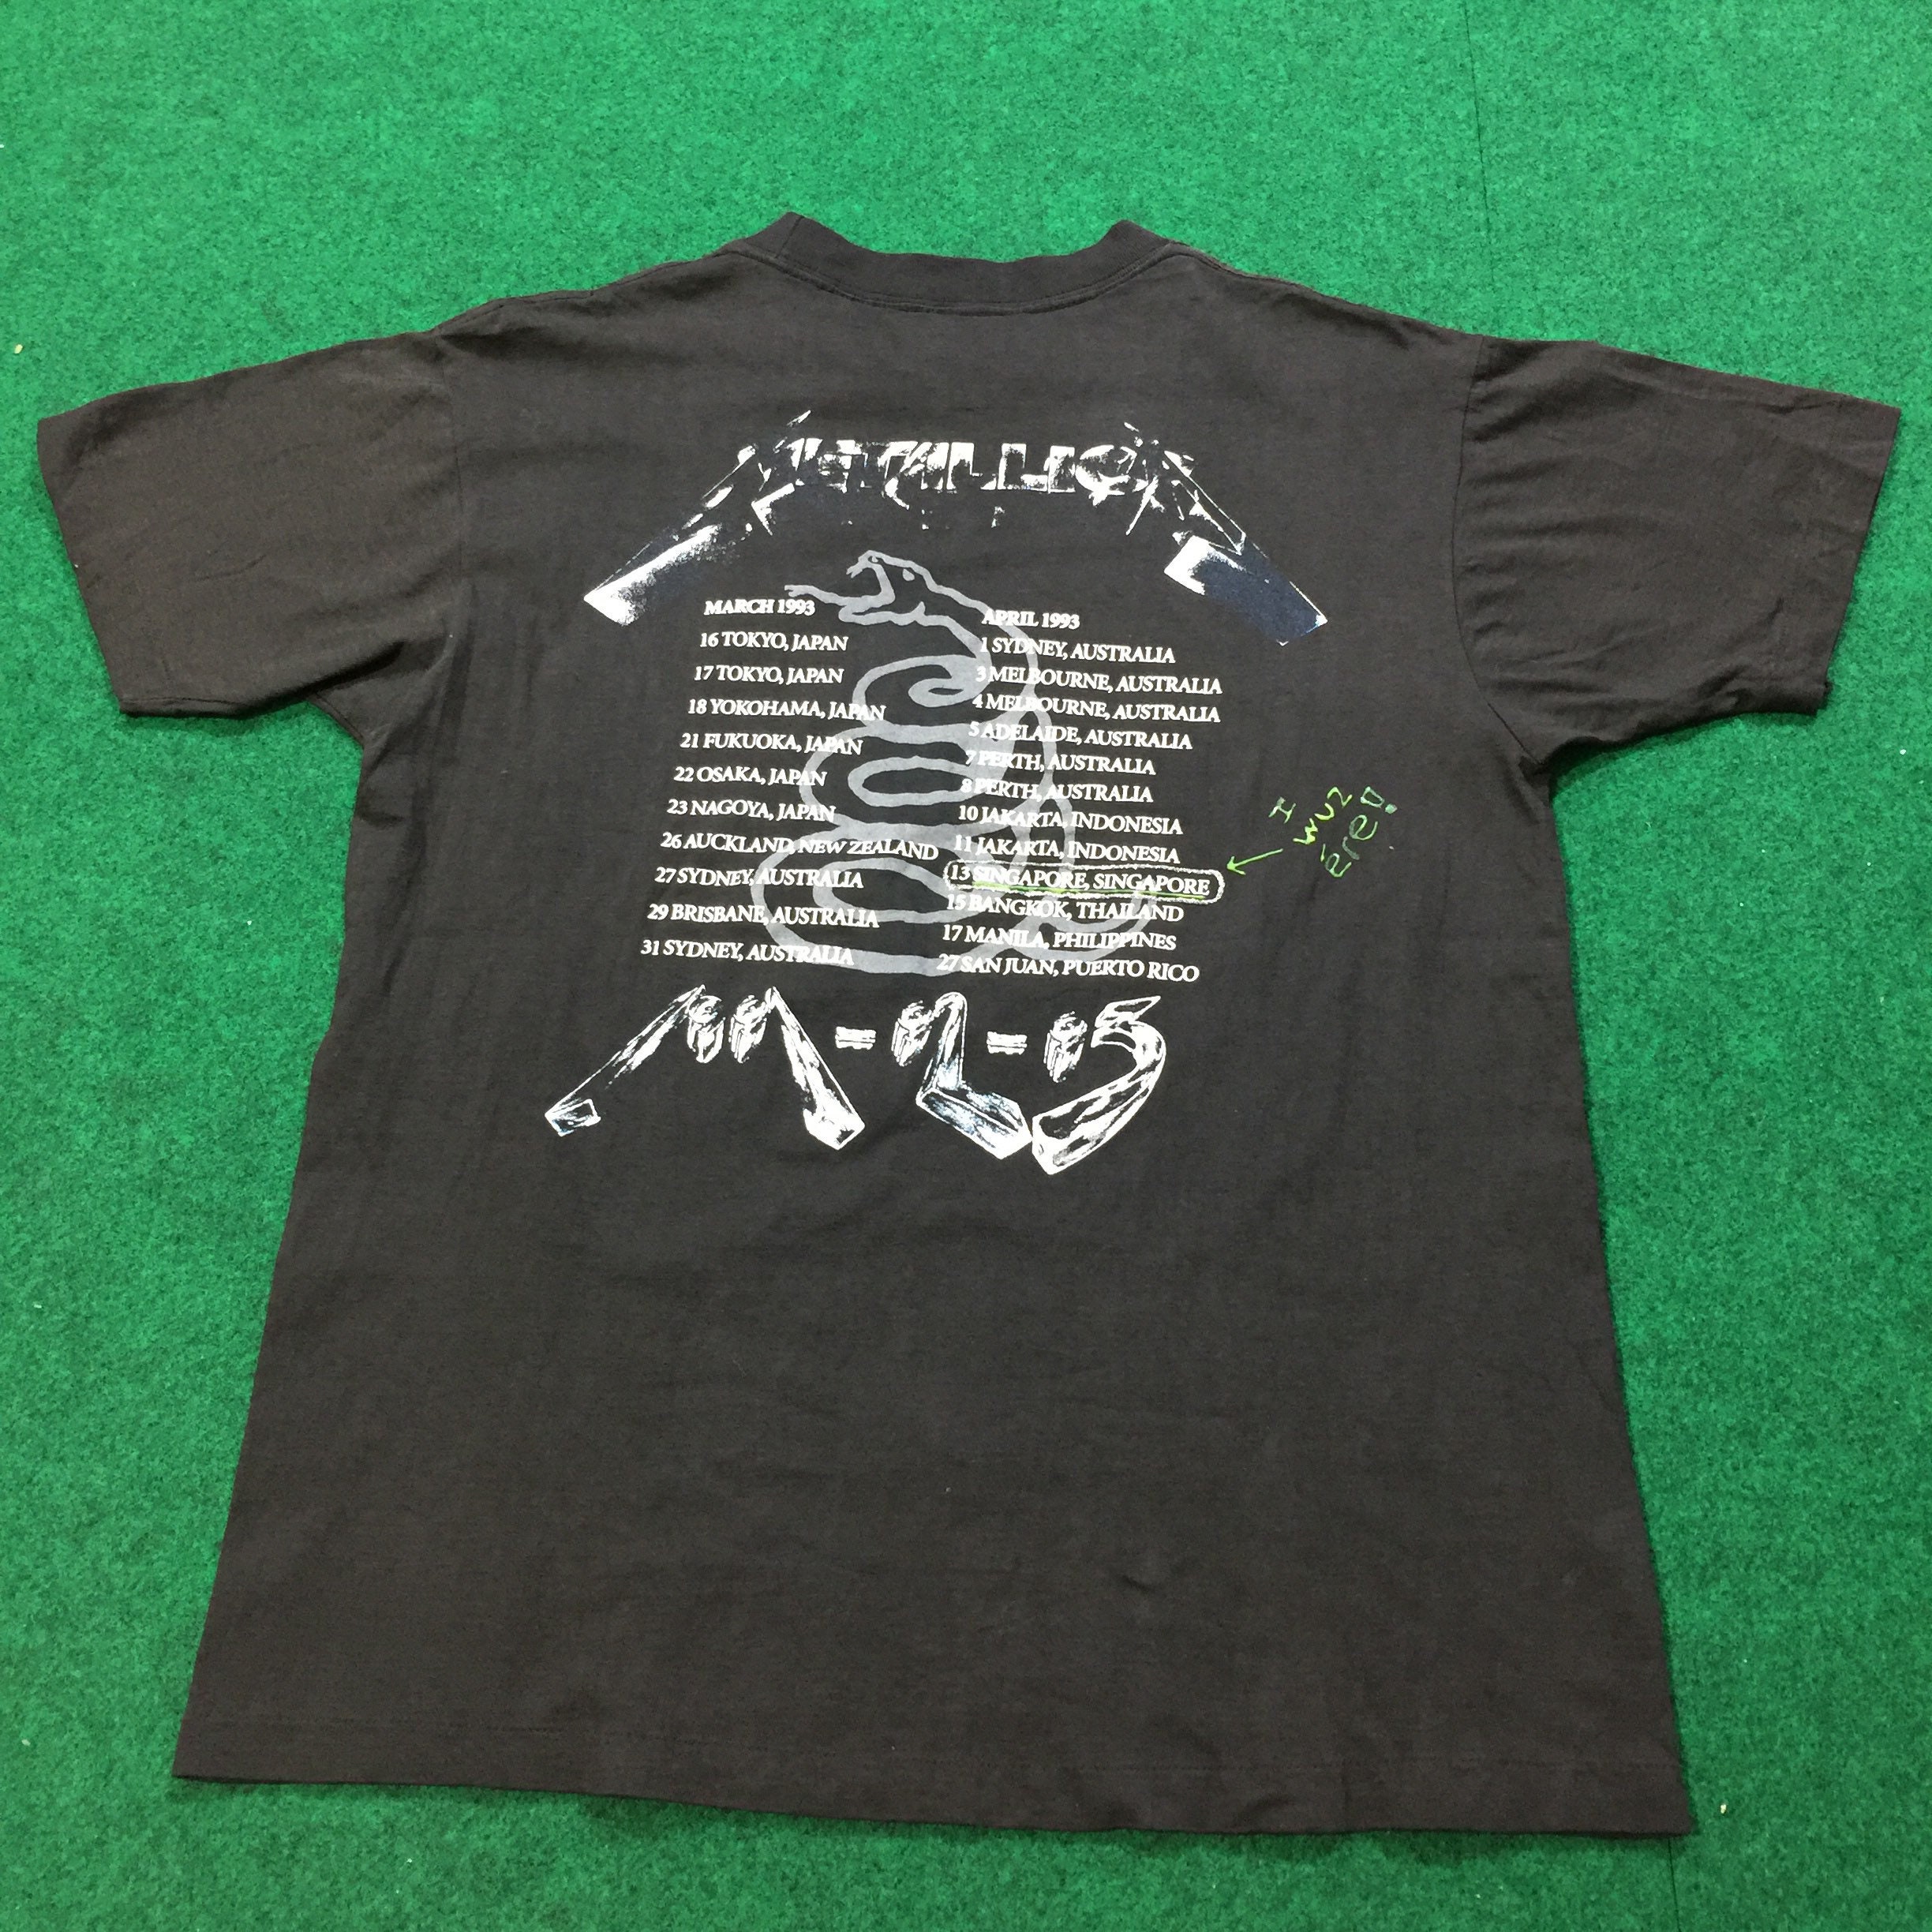 Vintage 1990s Metallica T-Shirt | Etsy